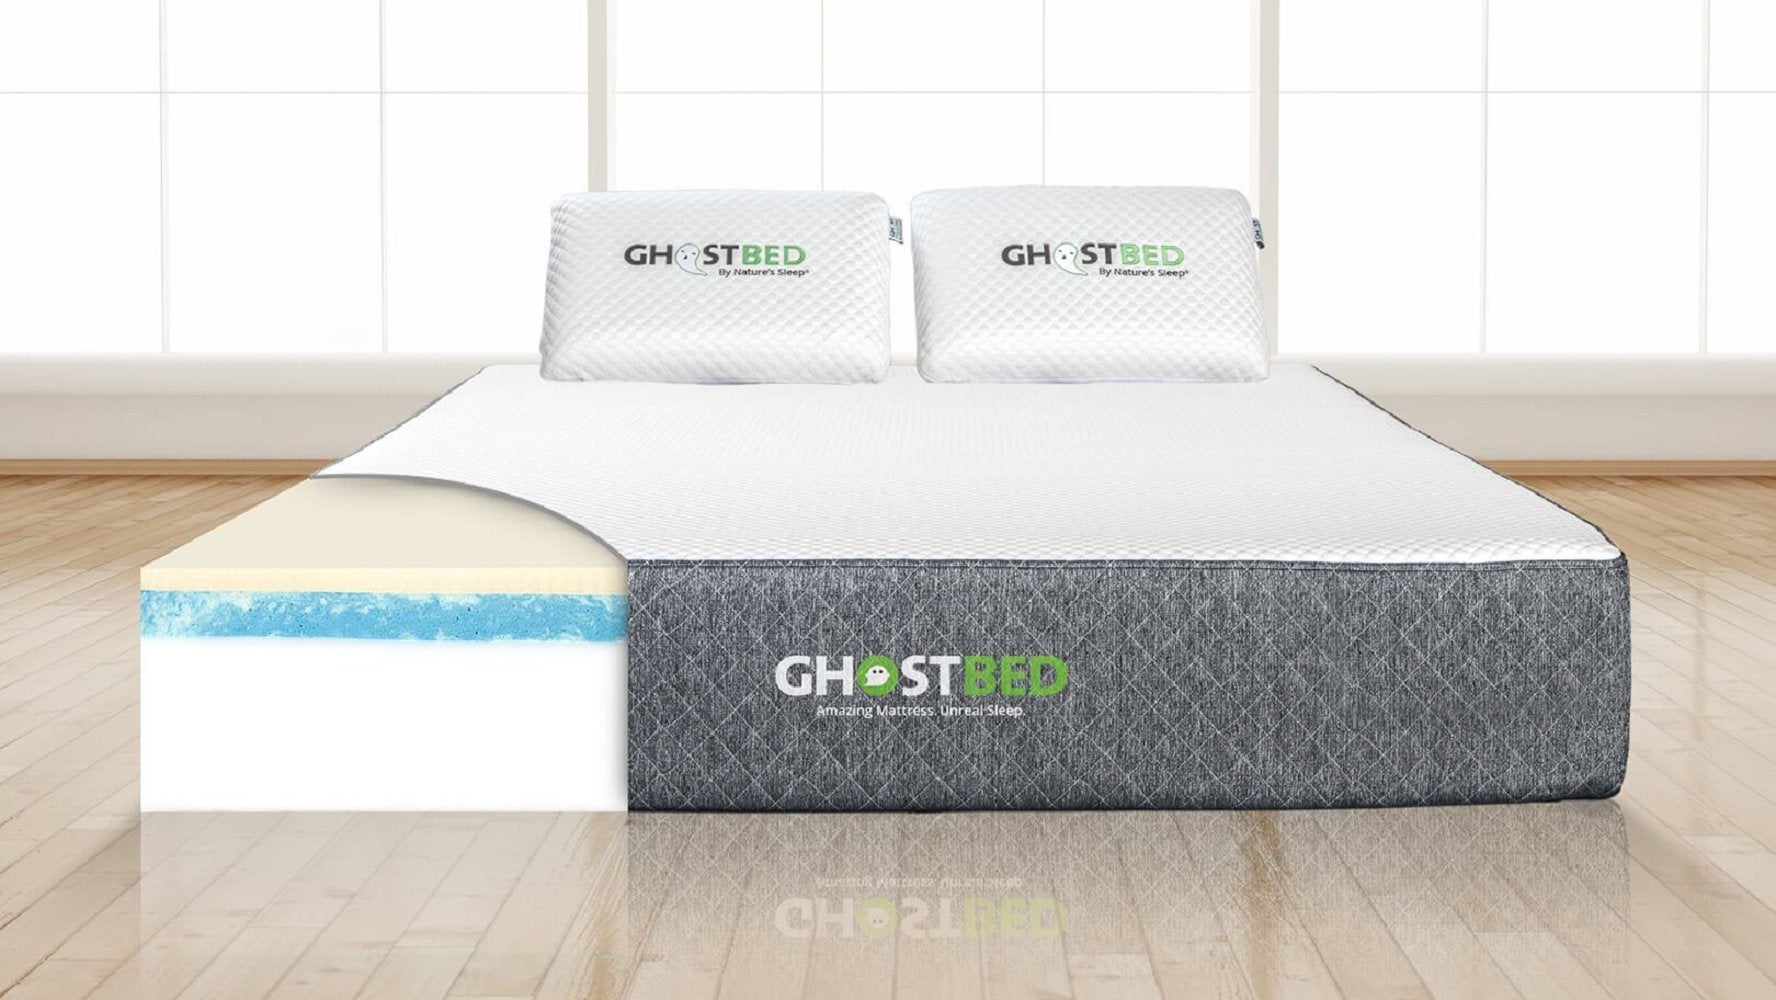 ghostbed 11 in. classic gel memory foam mattress